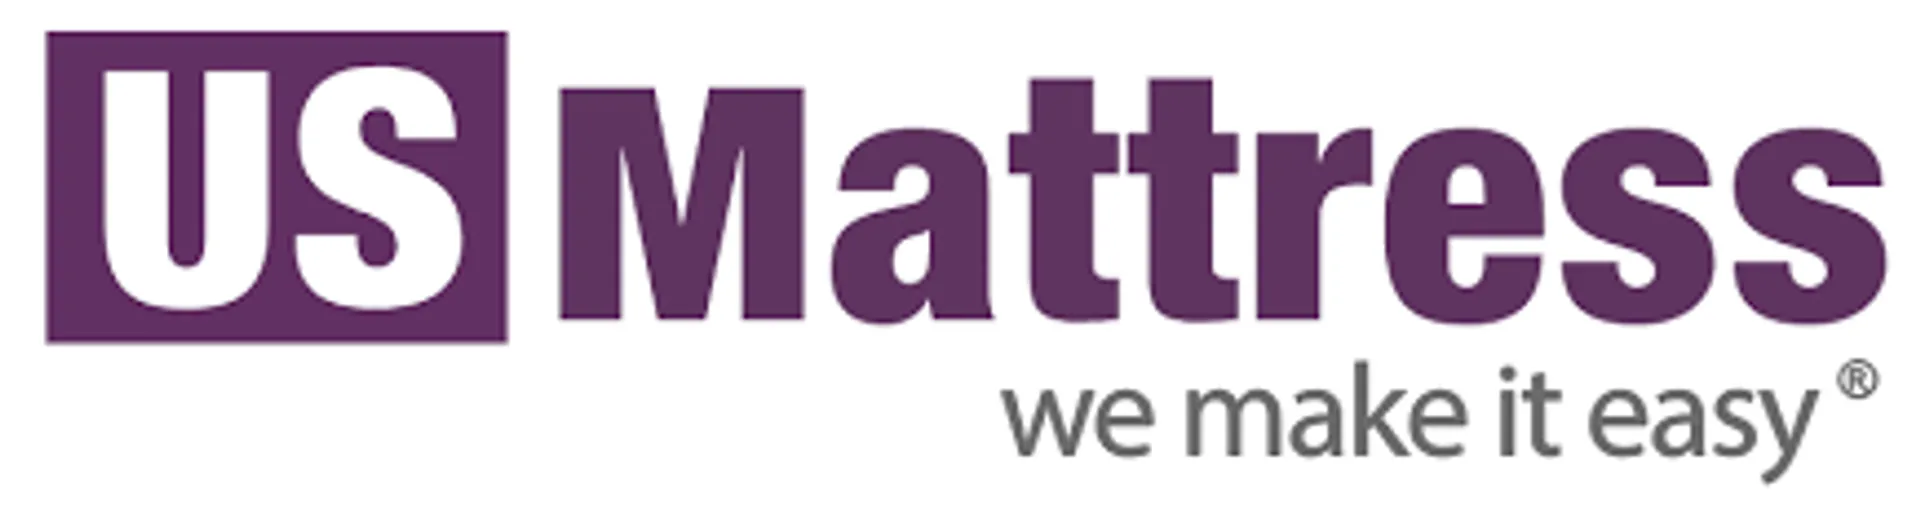 US MATTRESS logo current weekly ad